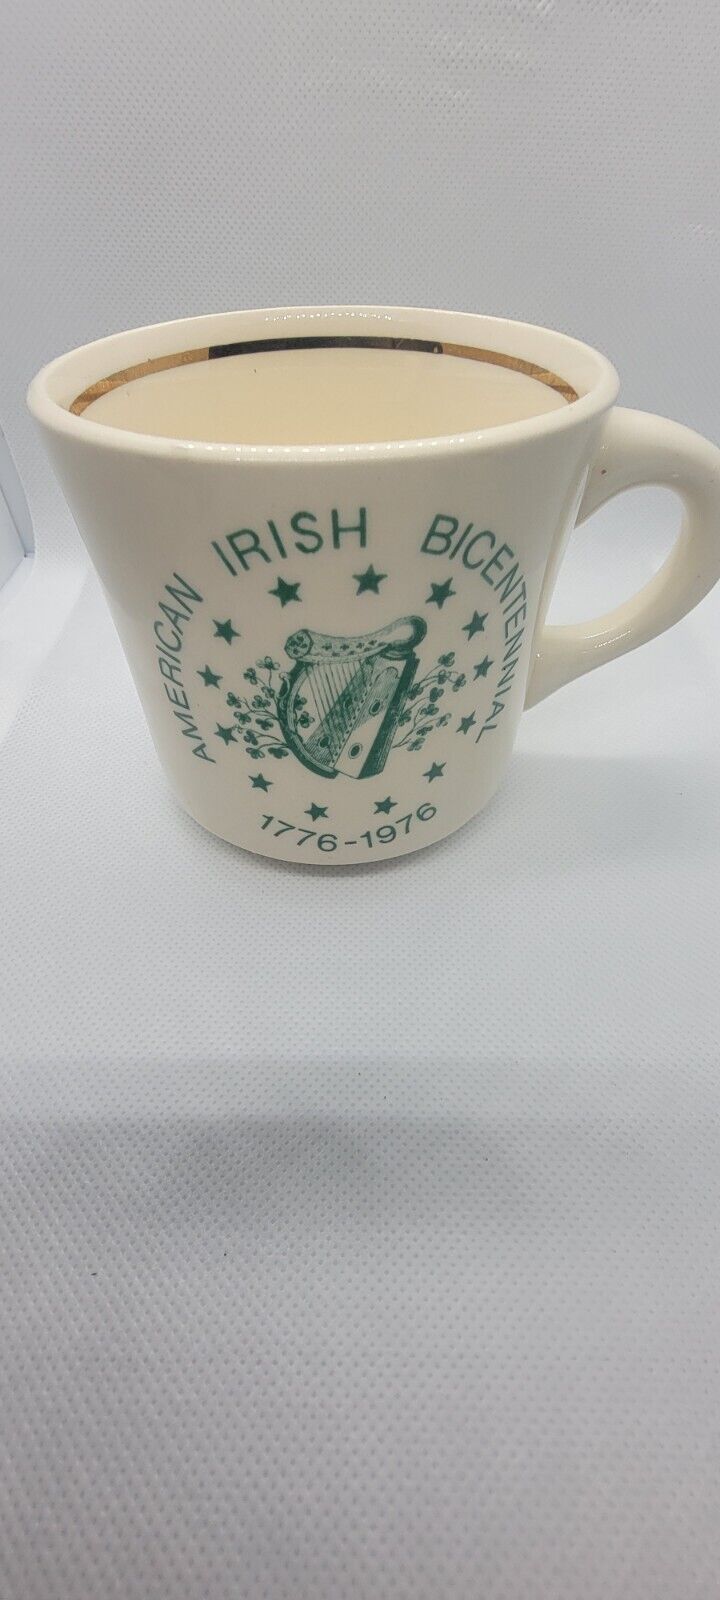 American-irish Bicentennial Coffee Mug,usa Mug,gold Trim 1776-1976,white & Green